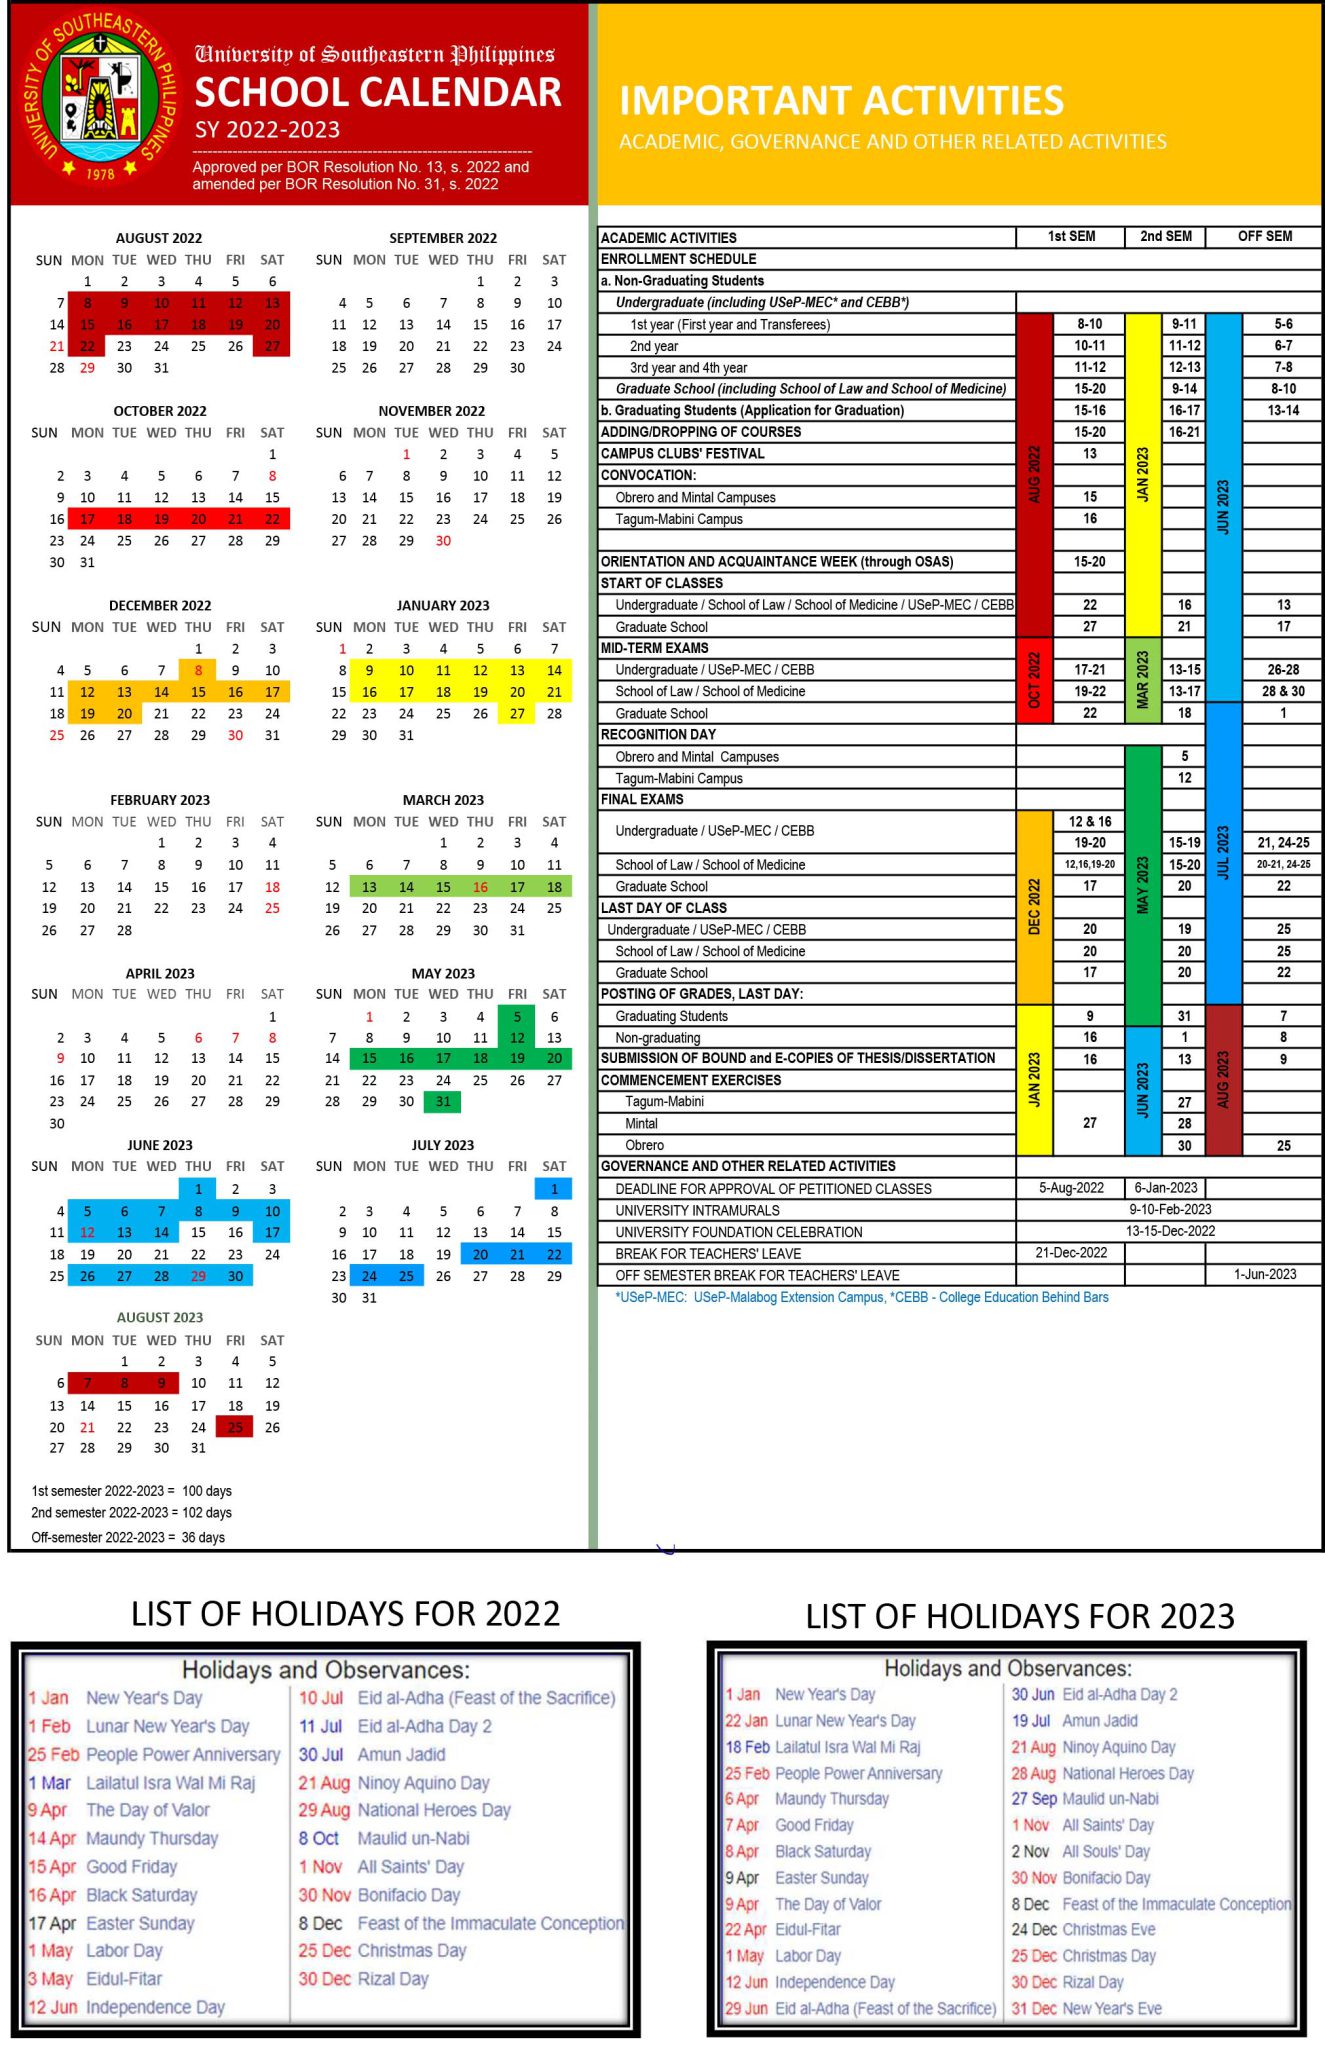 2025-2026-two-year-calendar-free-printable-word-templates